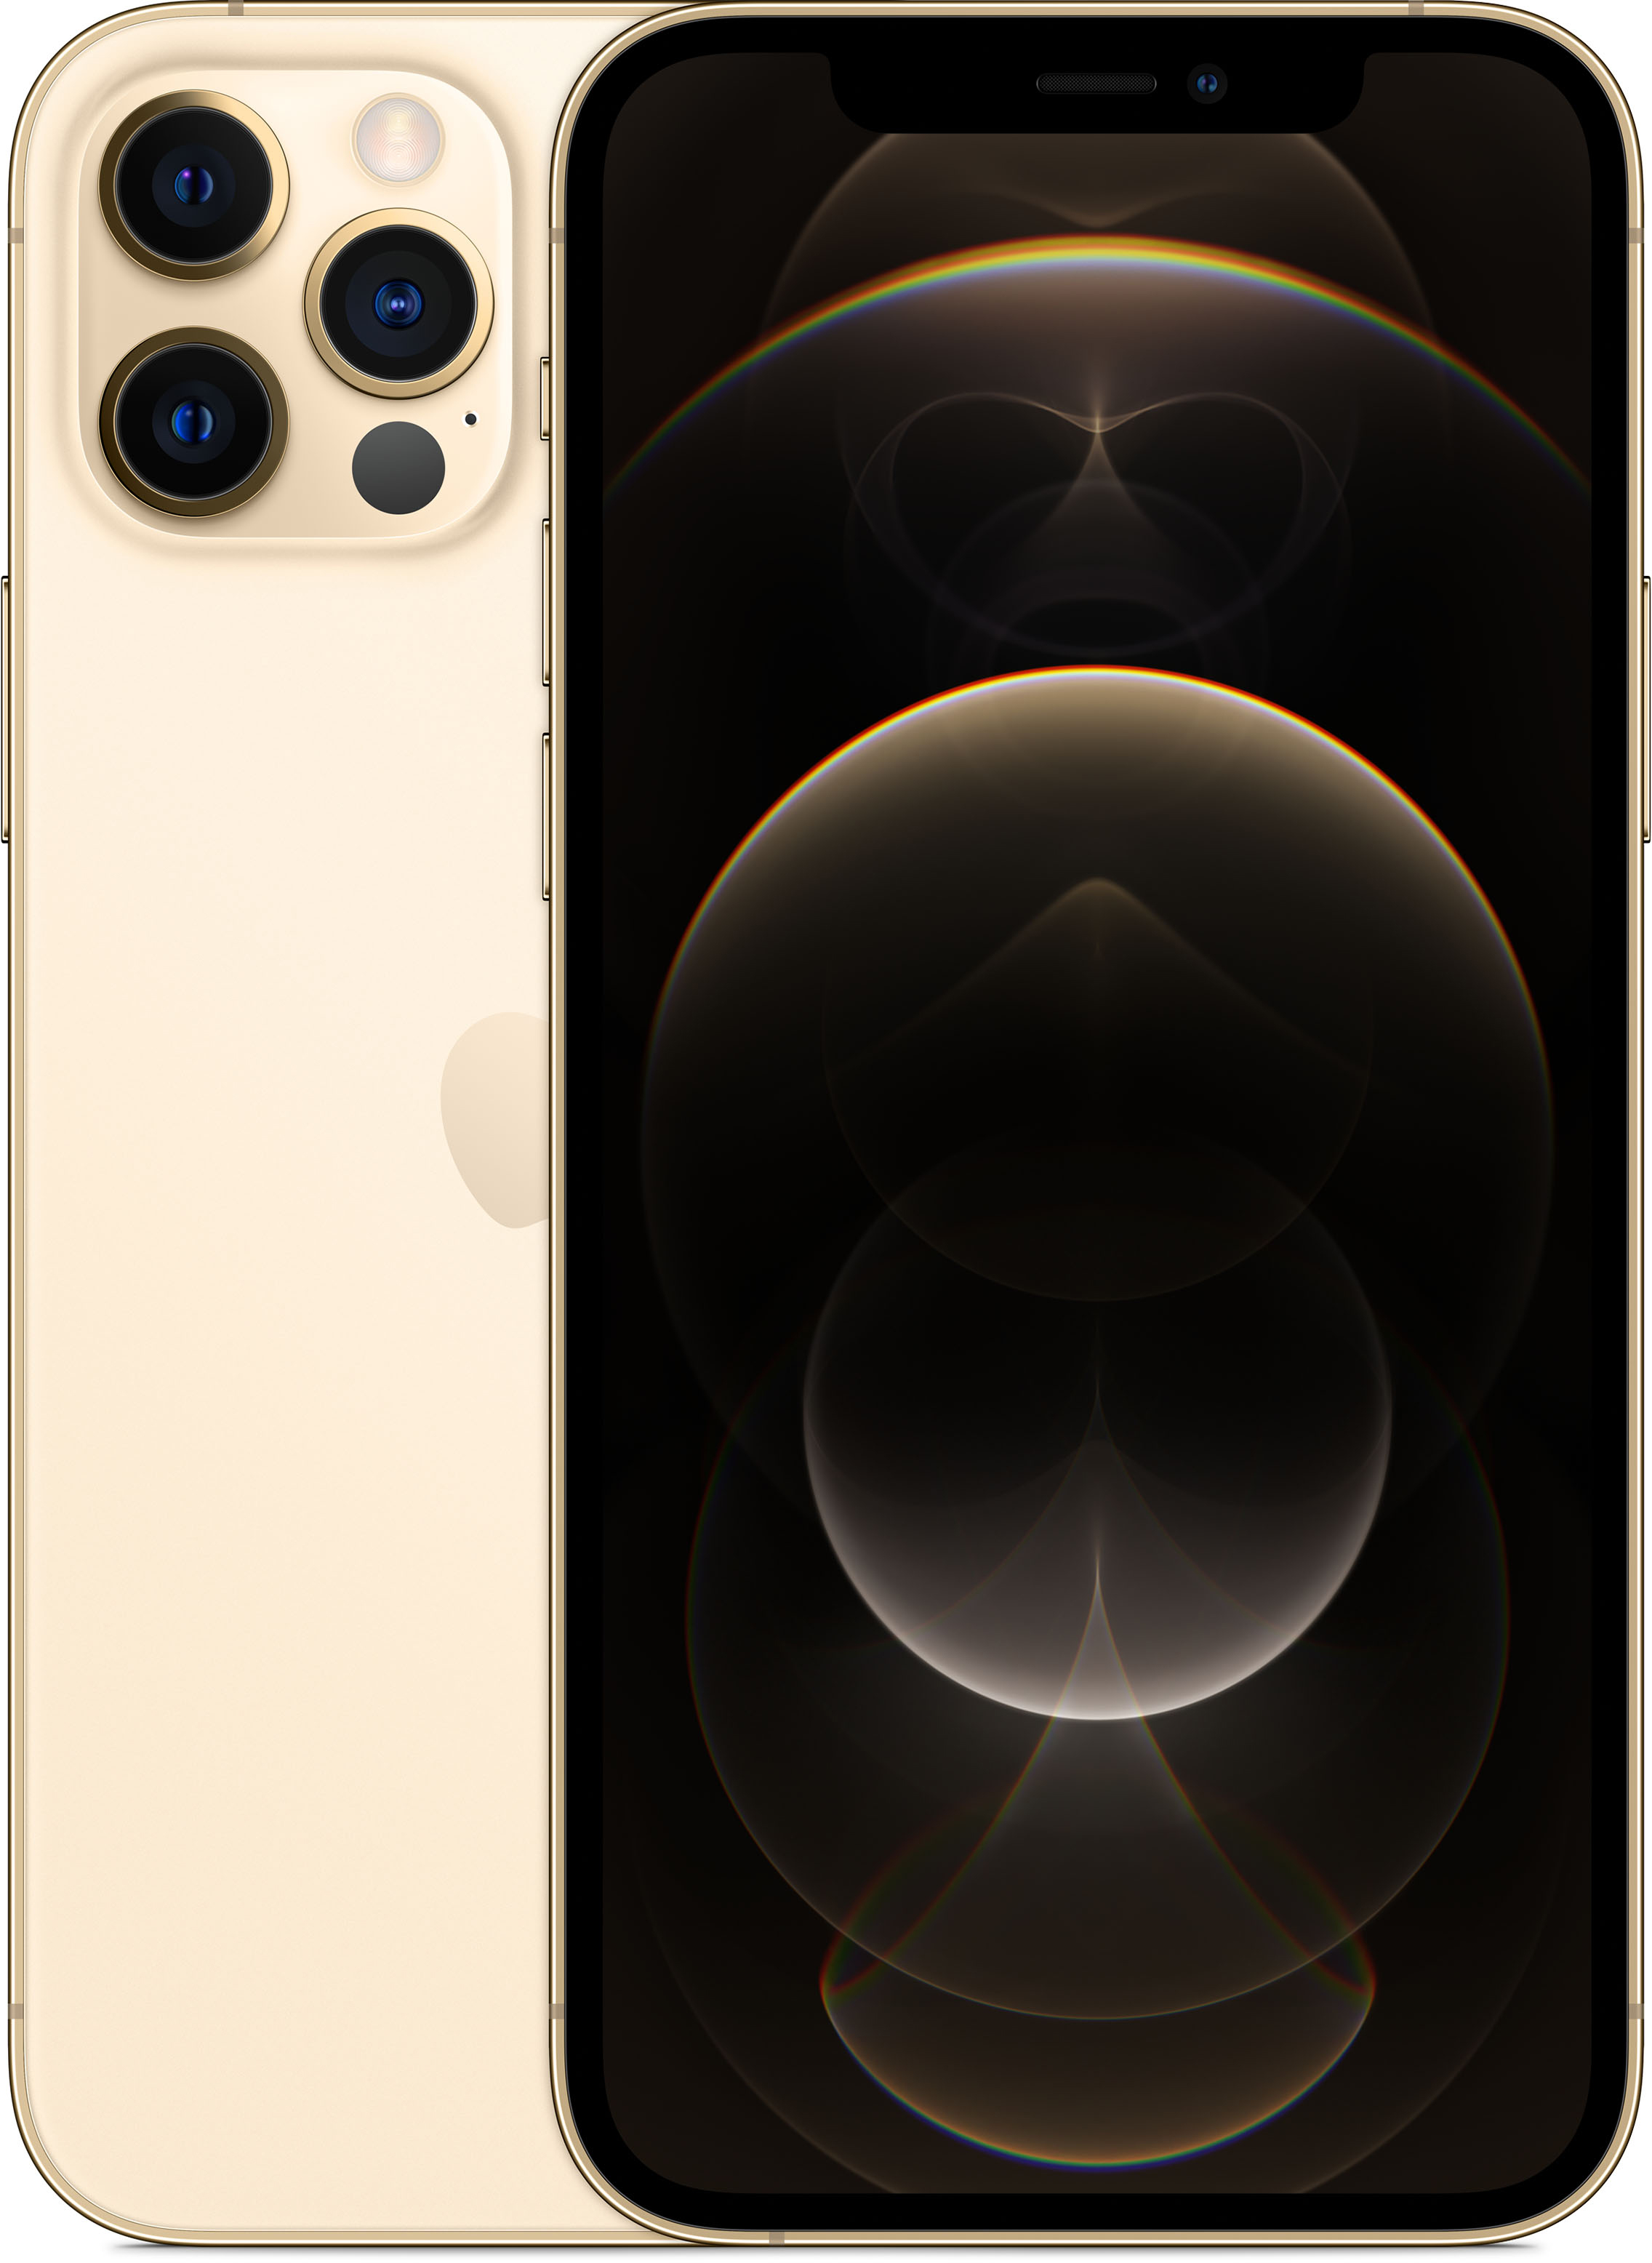 Apple iPhone 12 Pro Max 256GB (золотой)